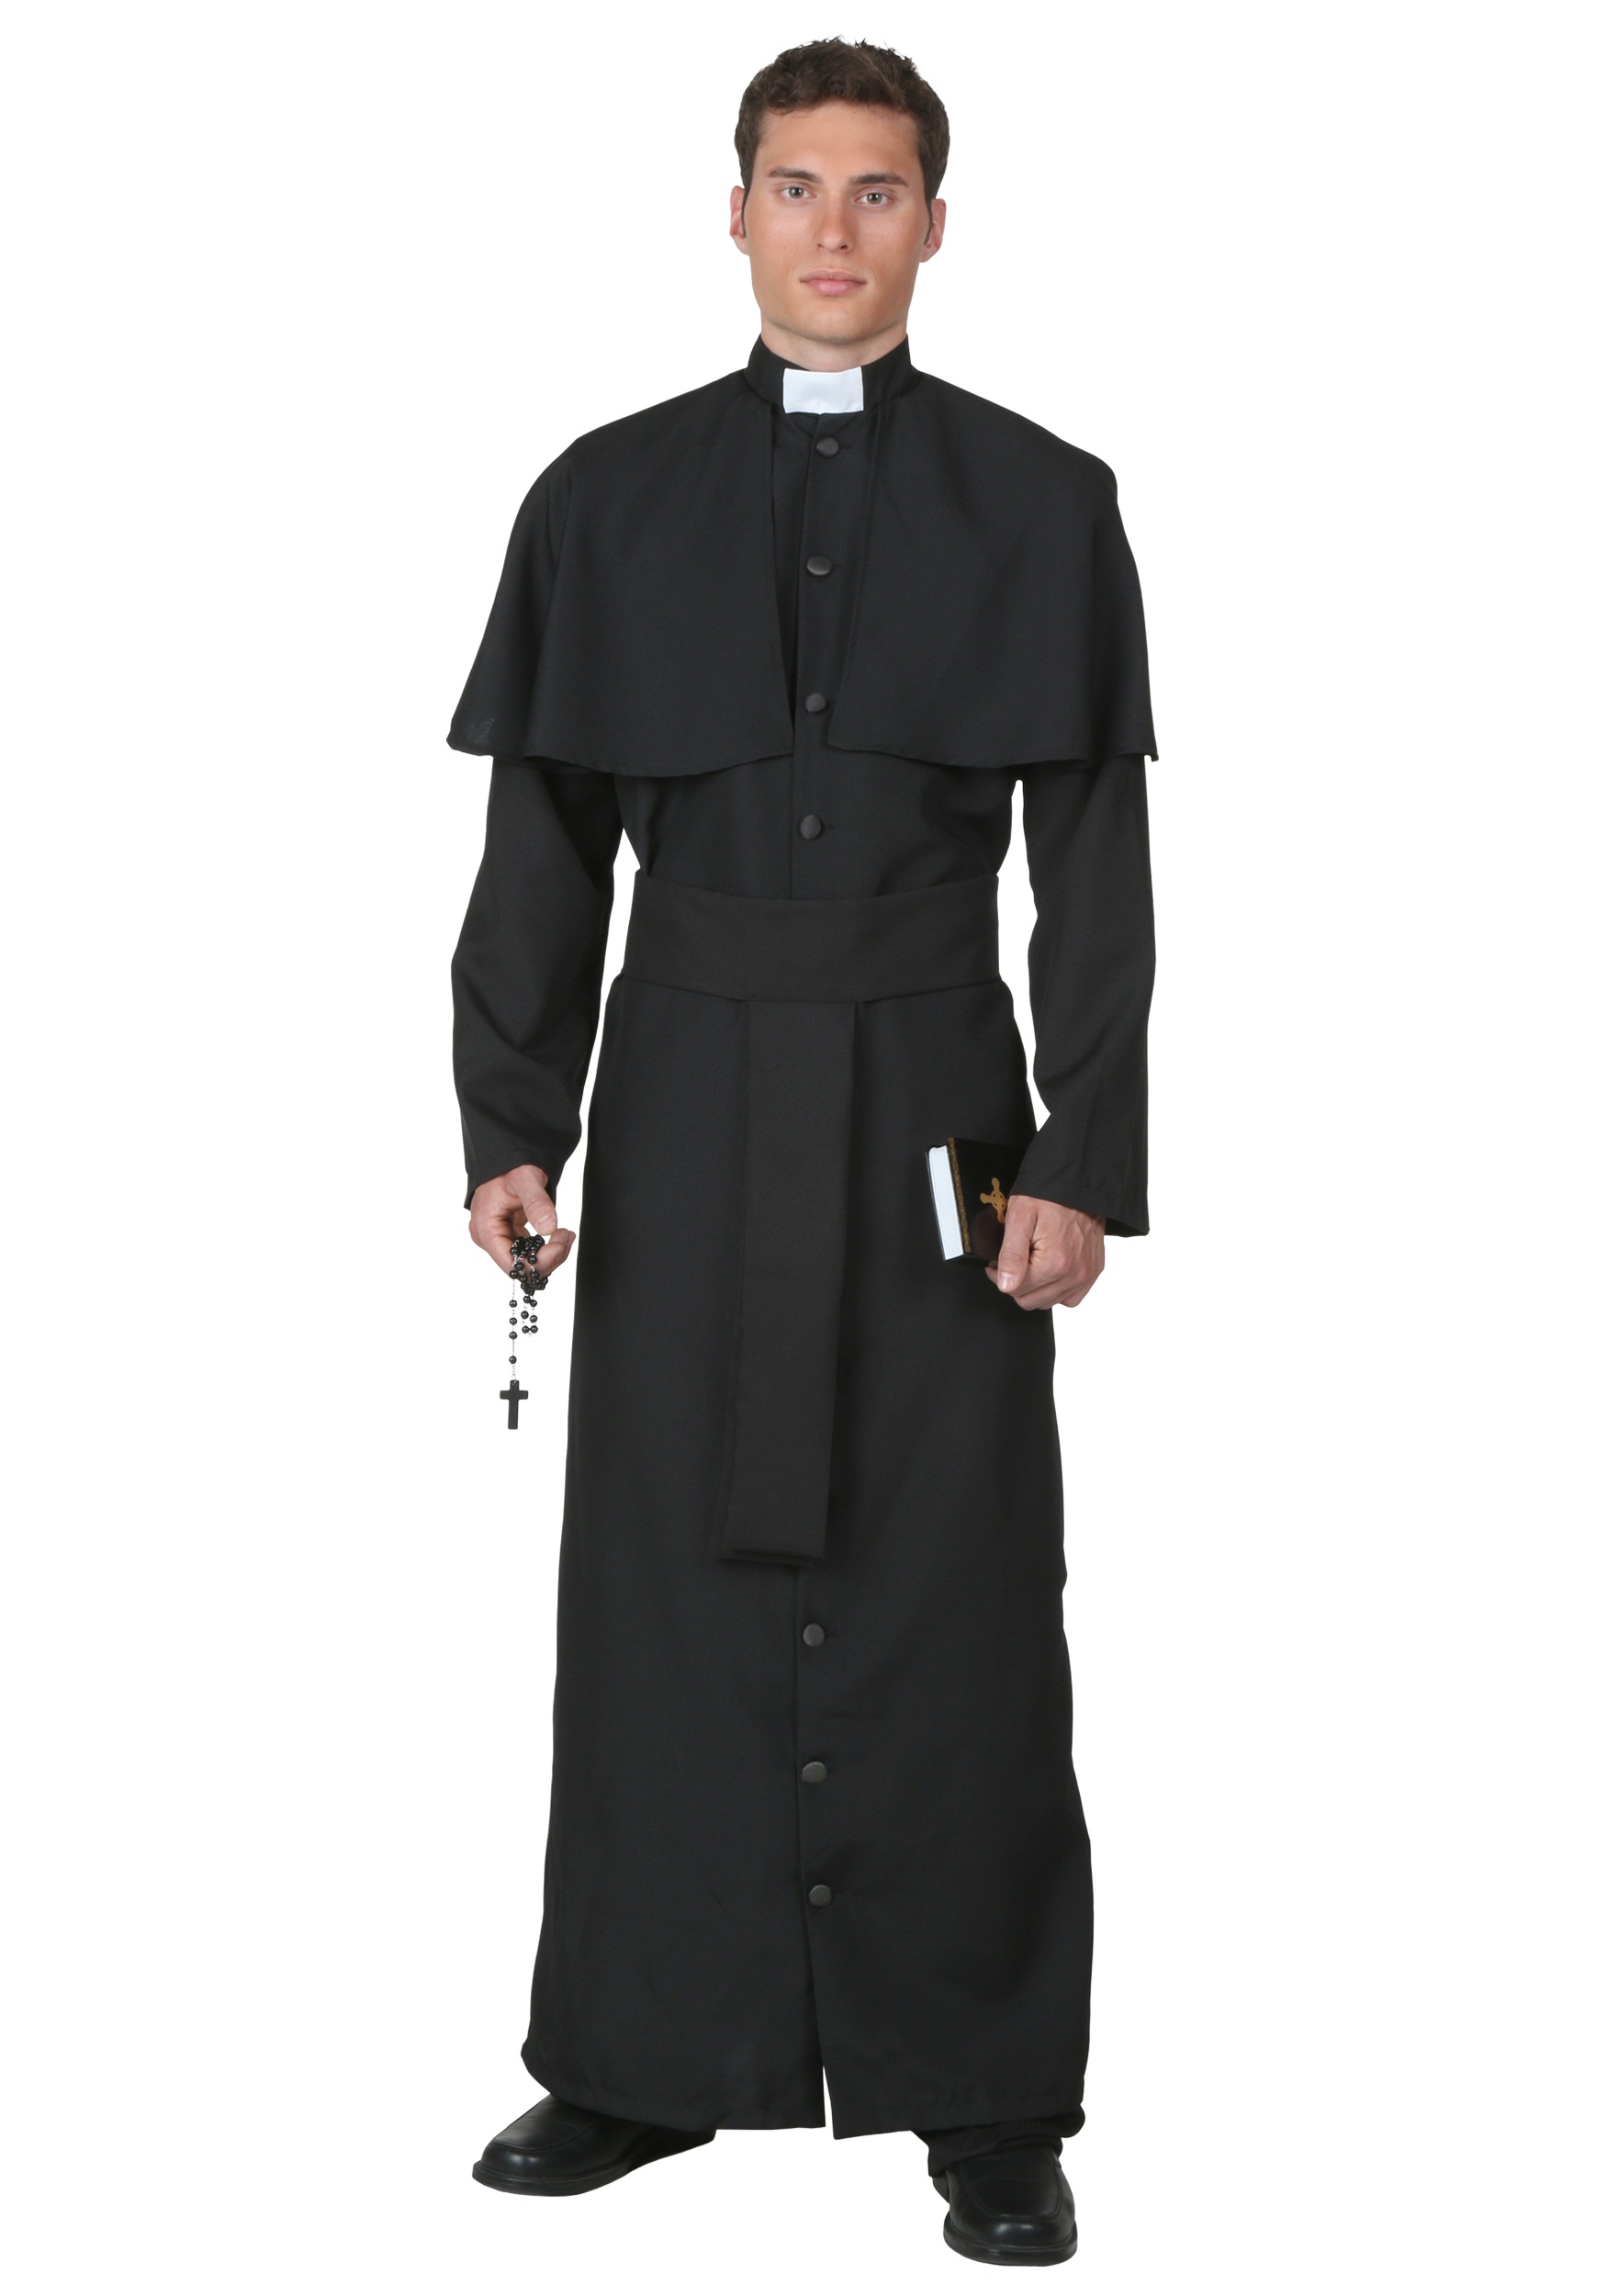 Deluxe Priest Plus Size Costume for Men